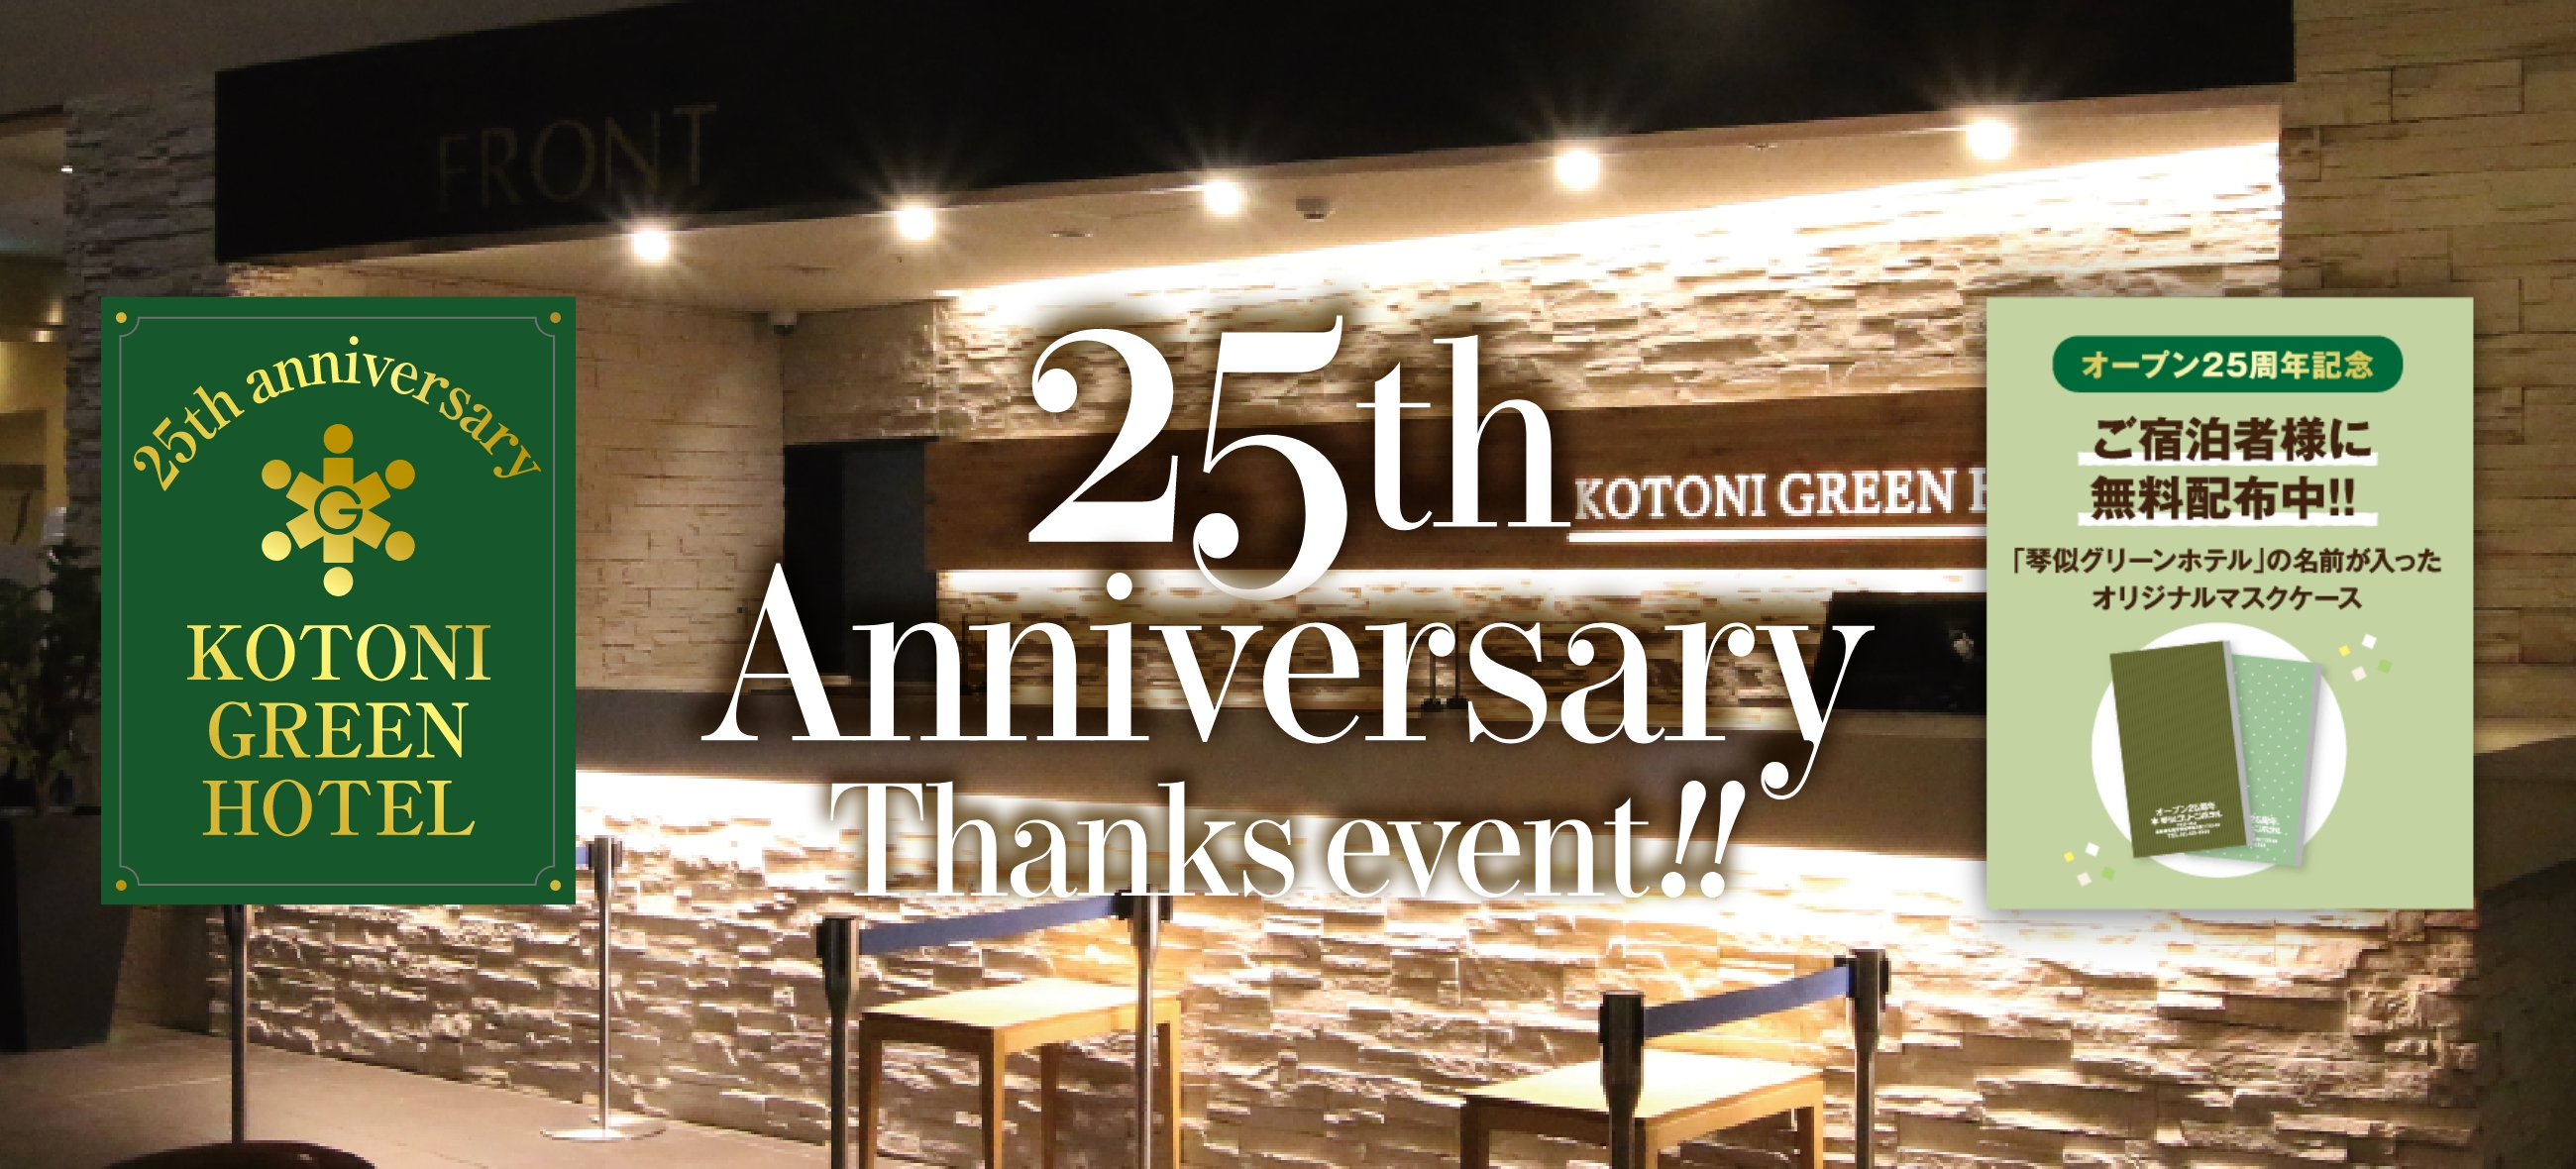 KOTONI GREEN HOTEL 25th Anniversary Thanks event!!